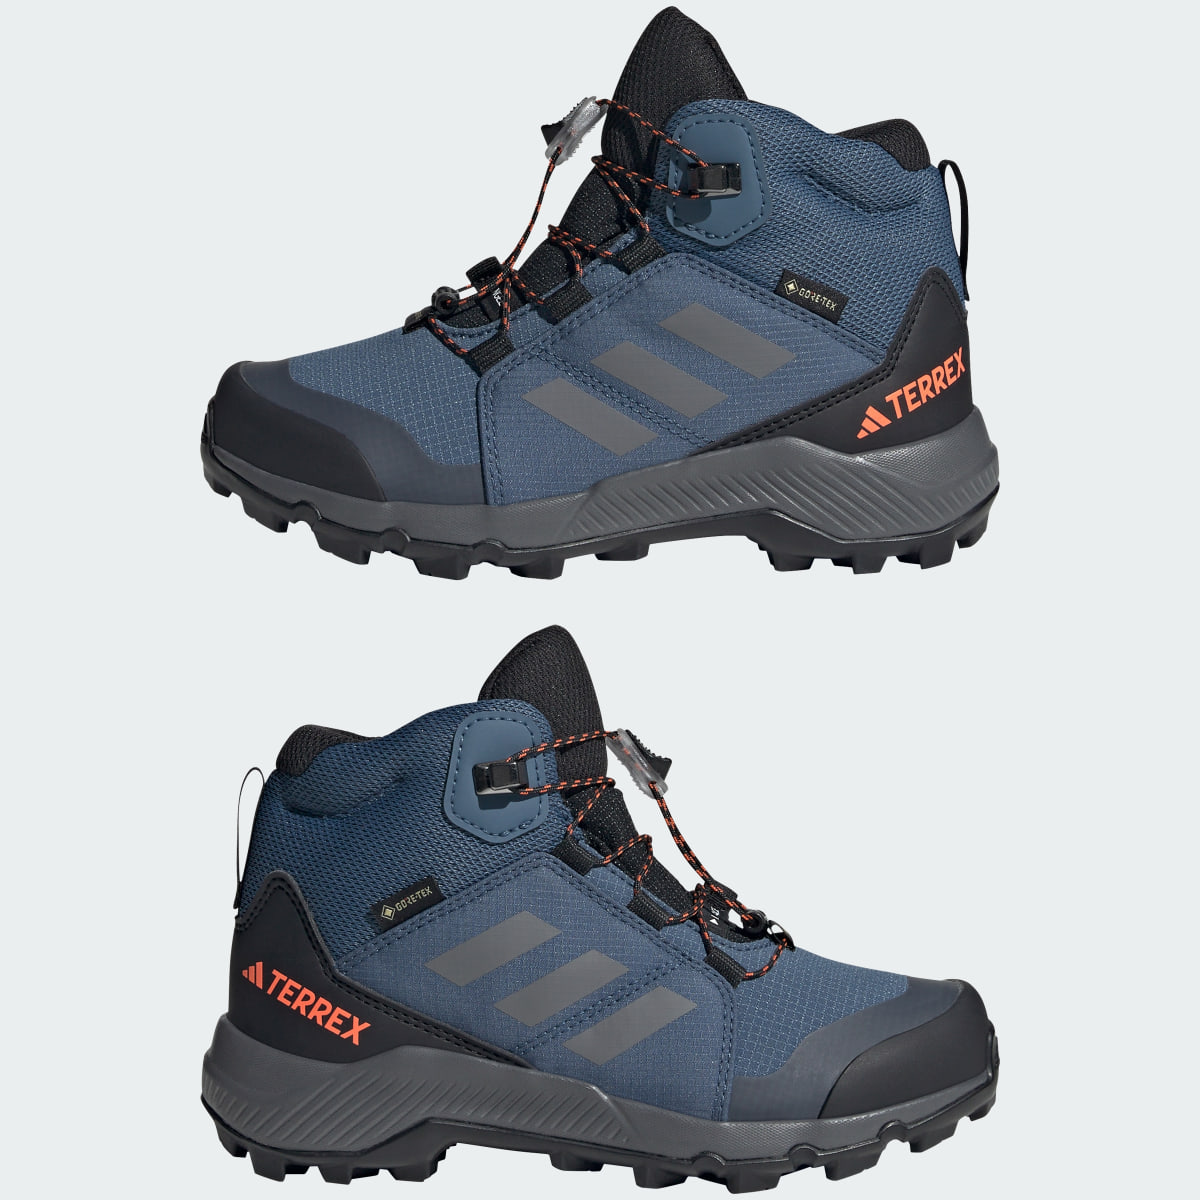 Adidas Scarpe da hiking Organizer Mid GORE-TEX. 9